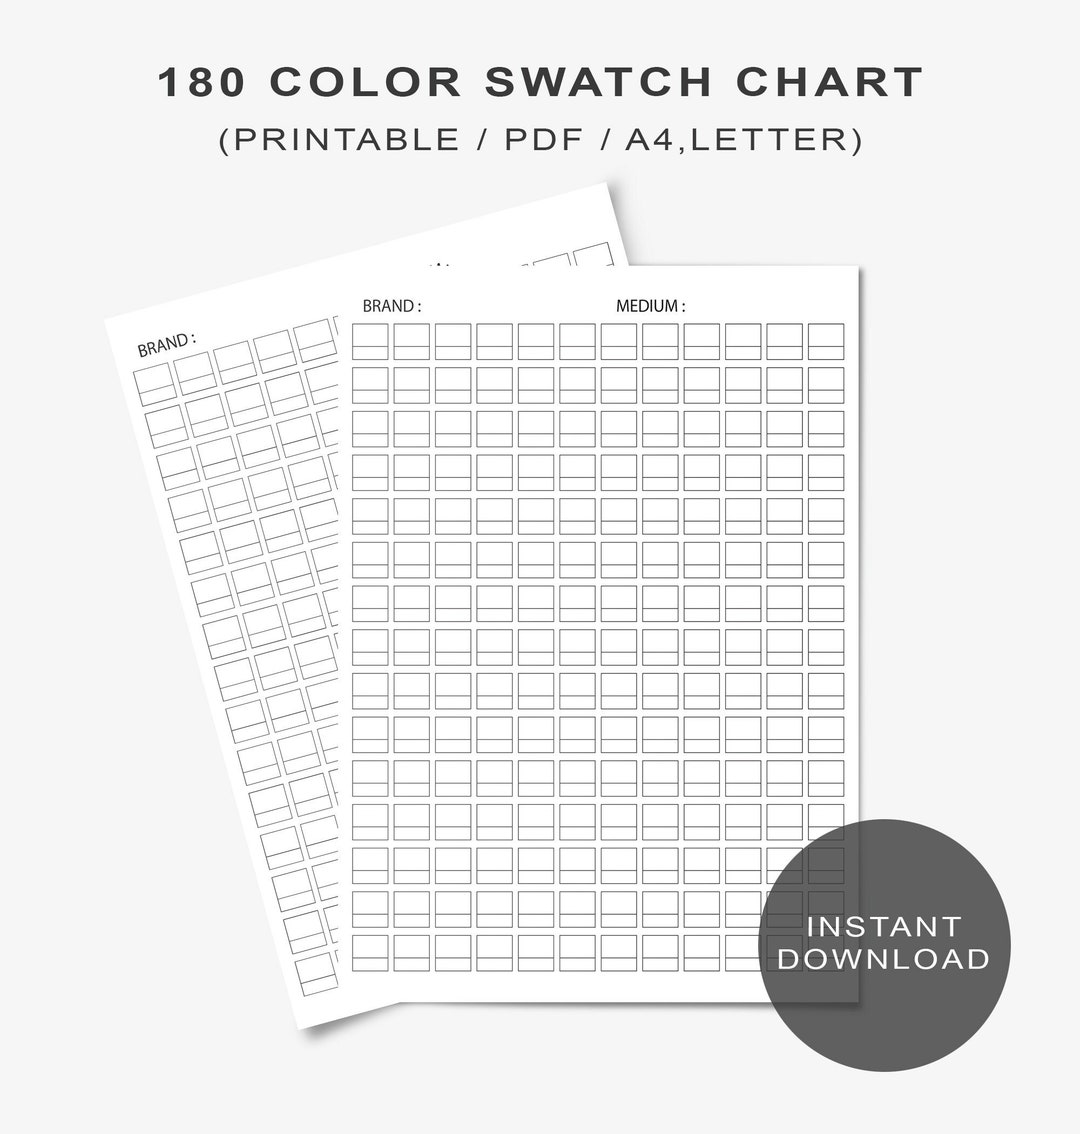 Soucolor 180 Chart | Pre-printed Color Codes| Swatch Boxes DIY | Digital  PDF| Single Page Printable | Floral Design